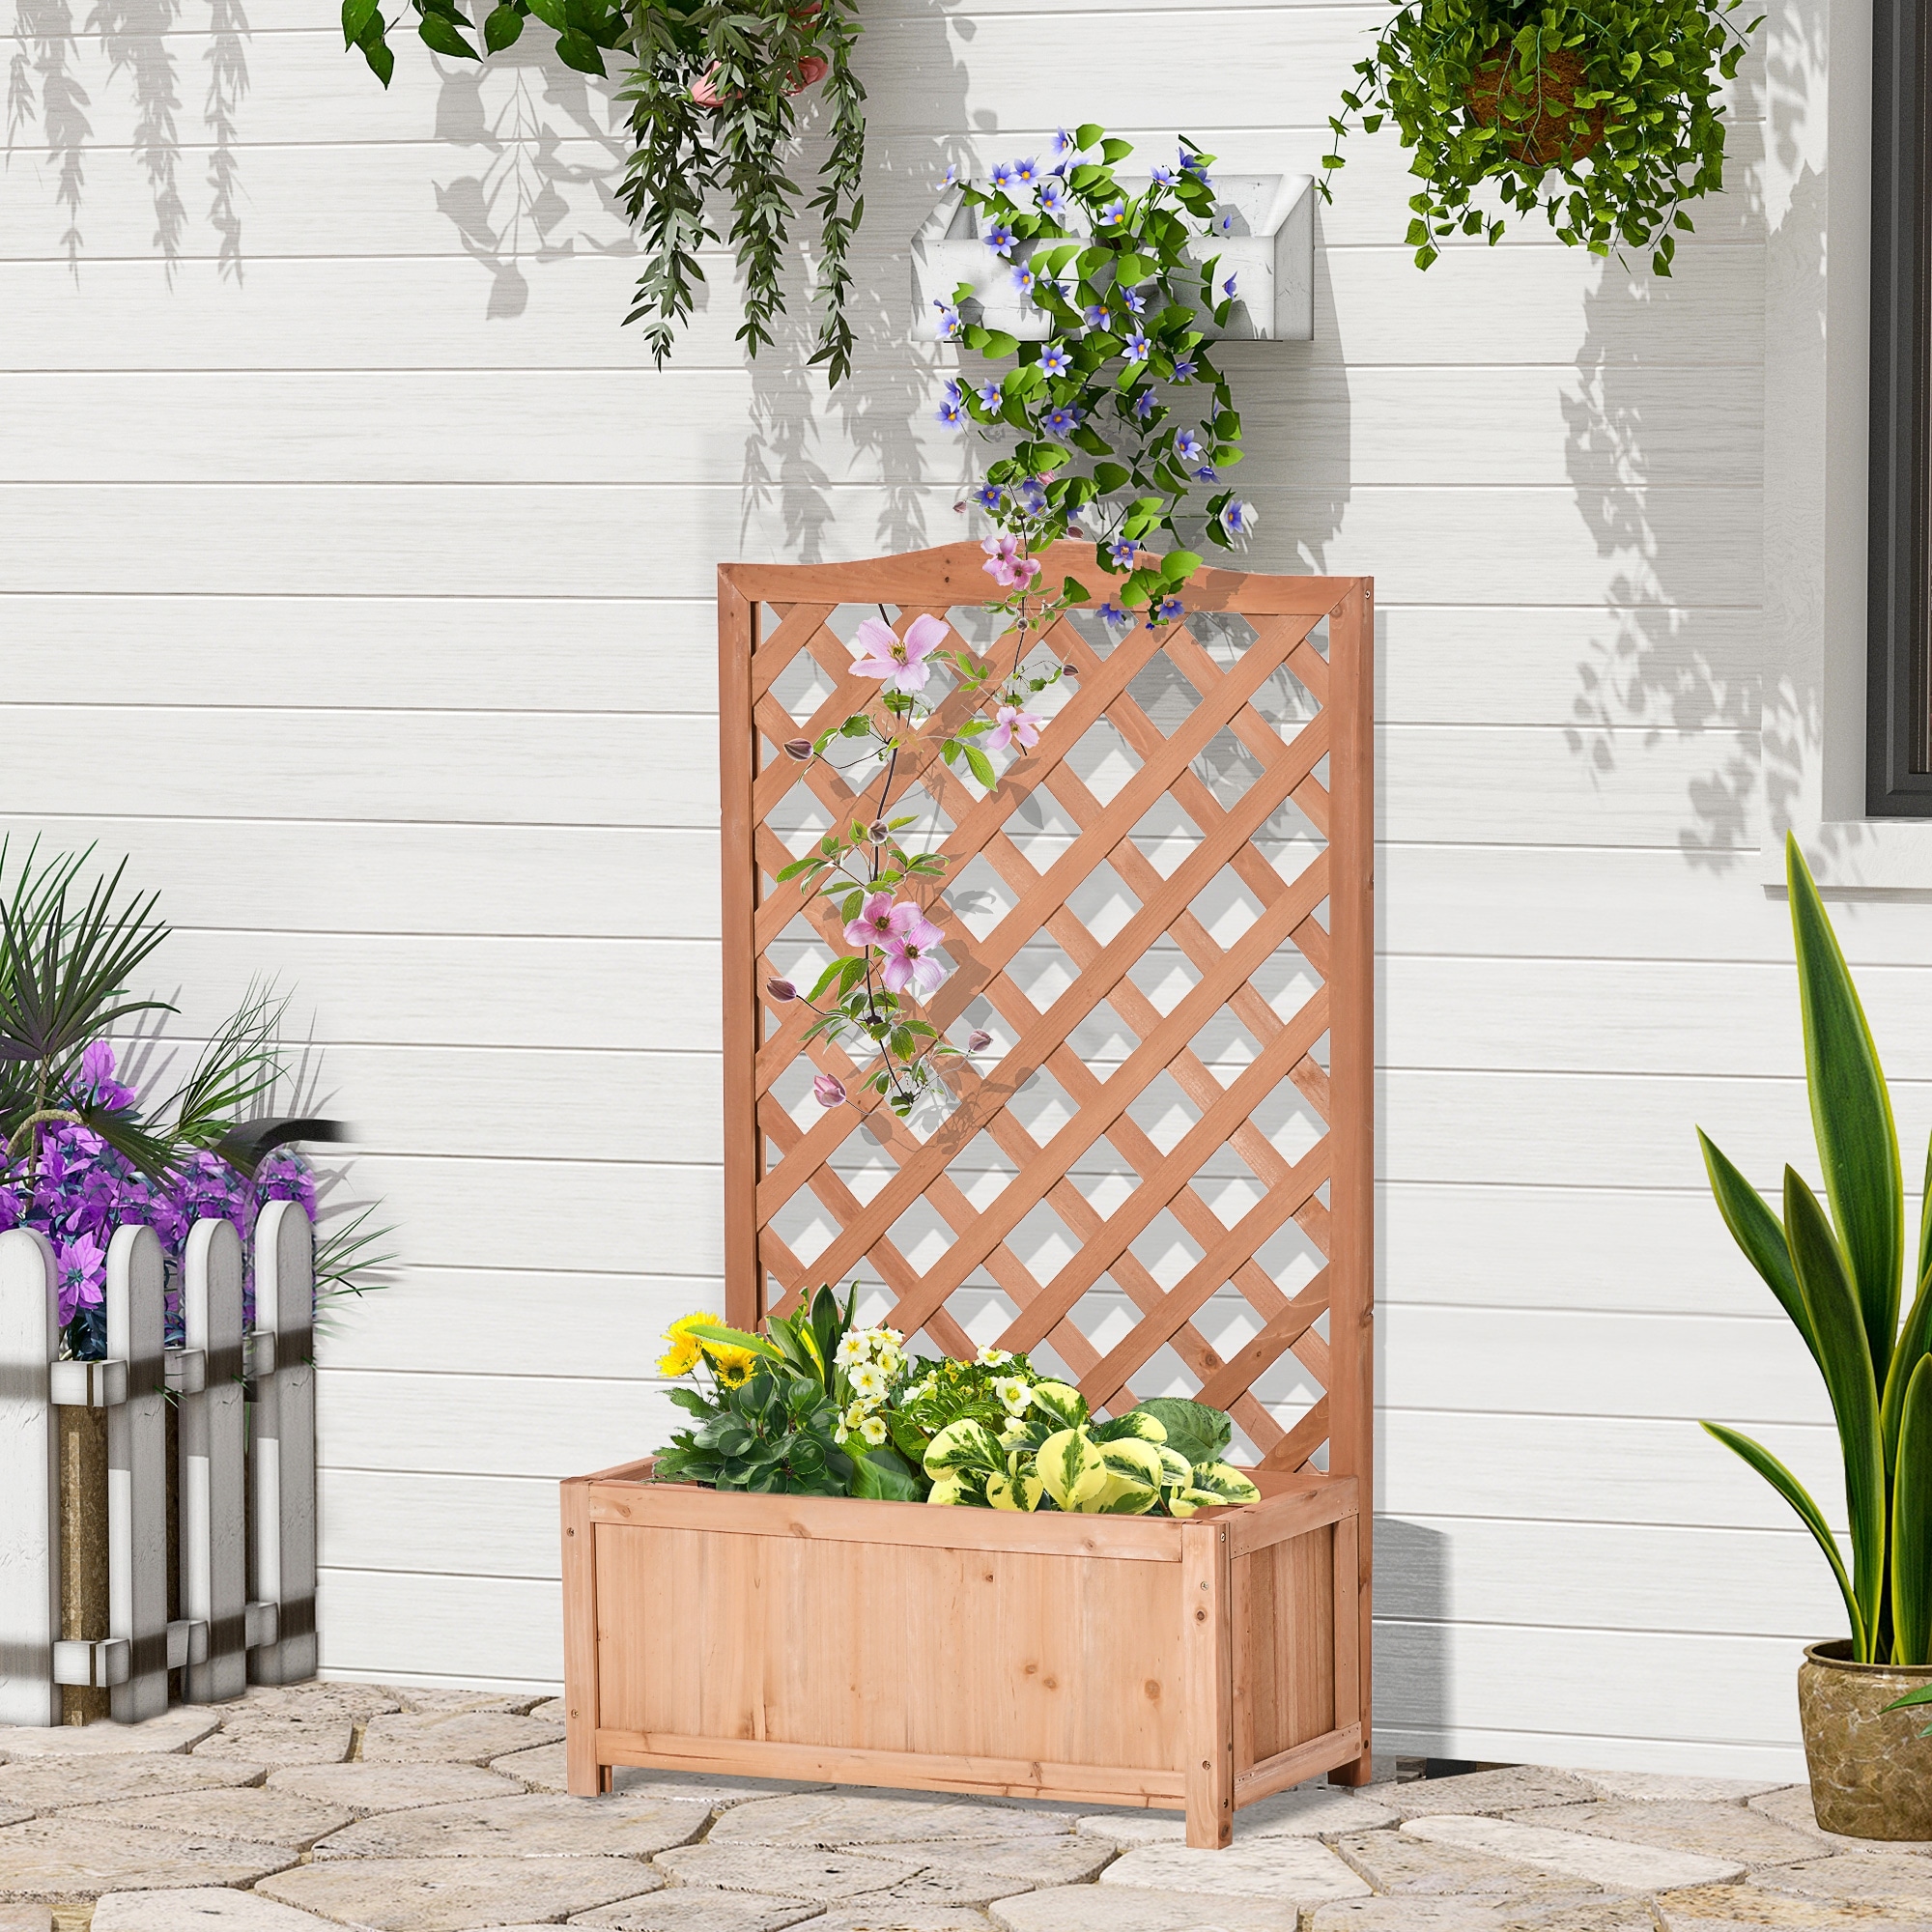 Outdoor Garden Raised Bed w/ Trellis Planter Box Kit Grow Flower Vegetable Stand 